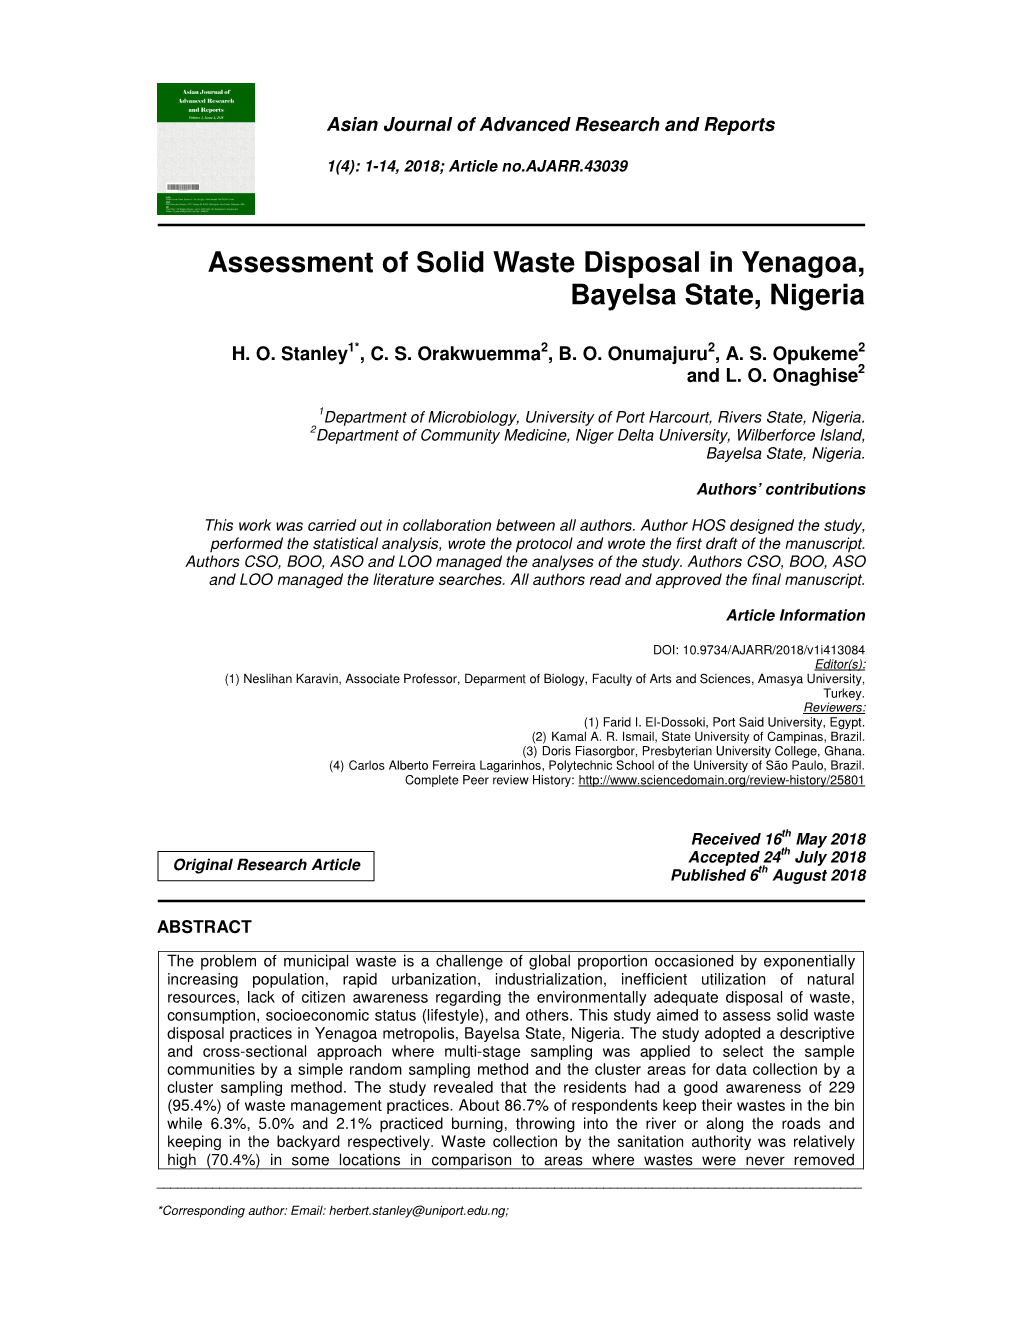 Assessment of Solid Waste Disposal in Yenagoa, Bayelsa State, Nigeria